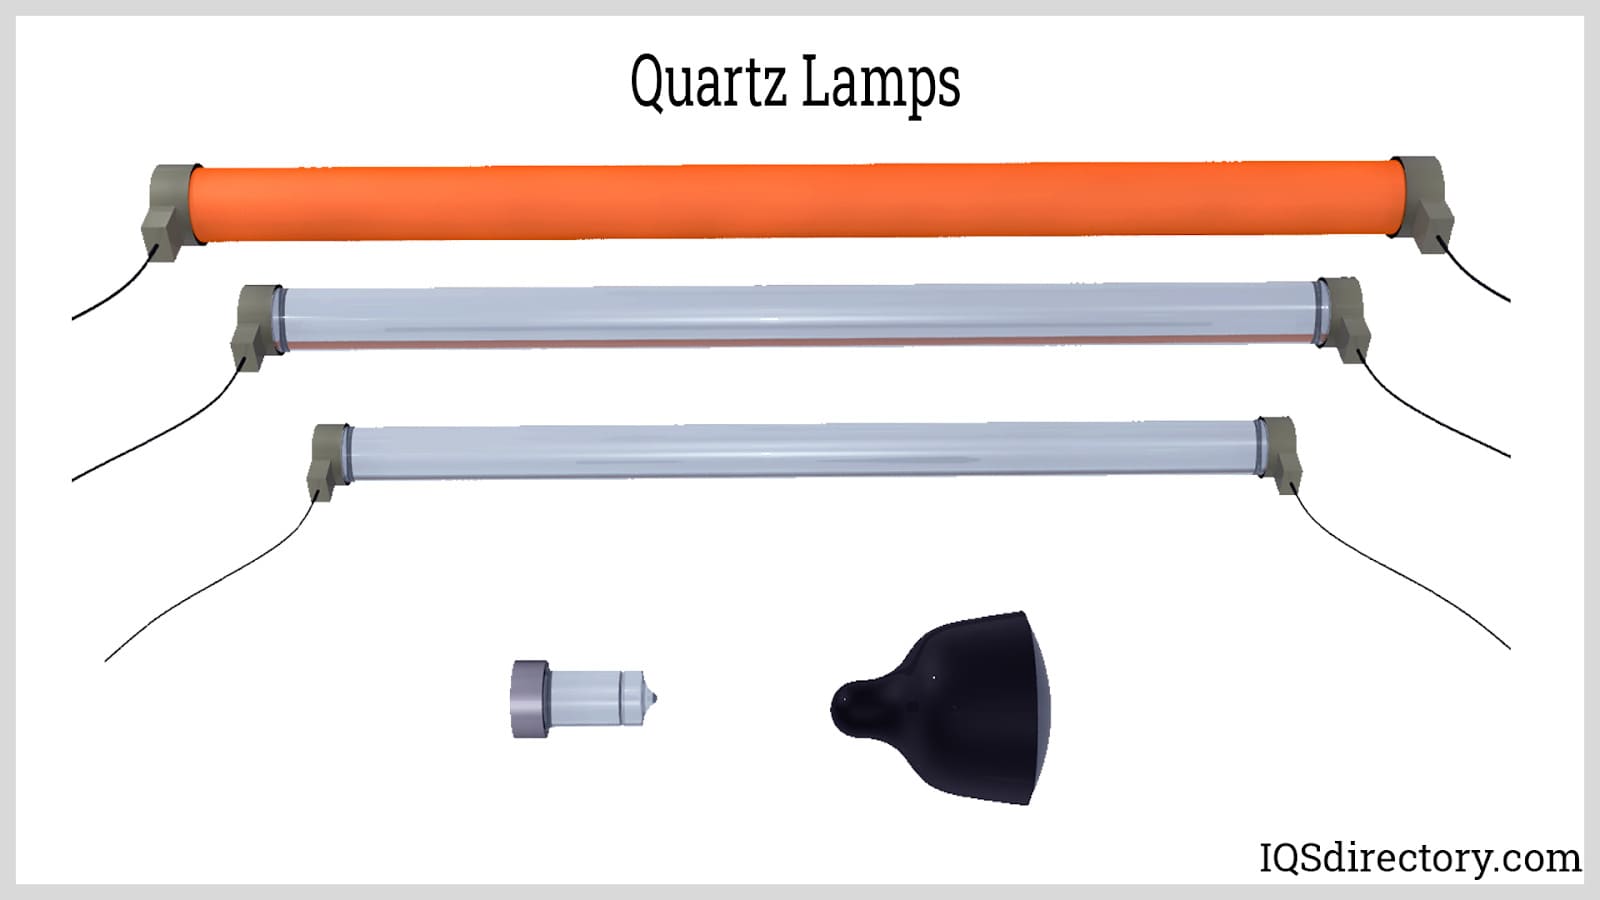 Quartz Lamps